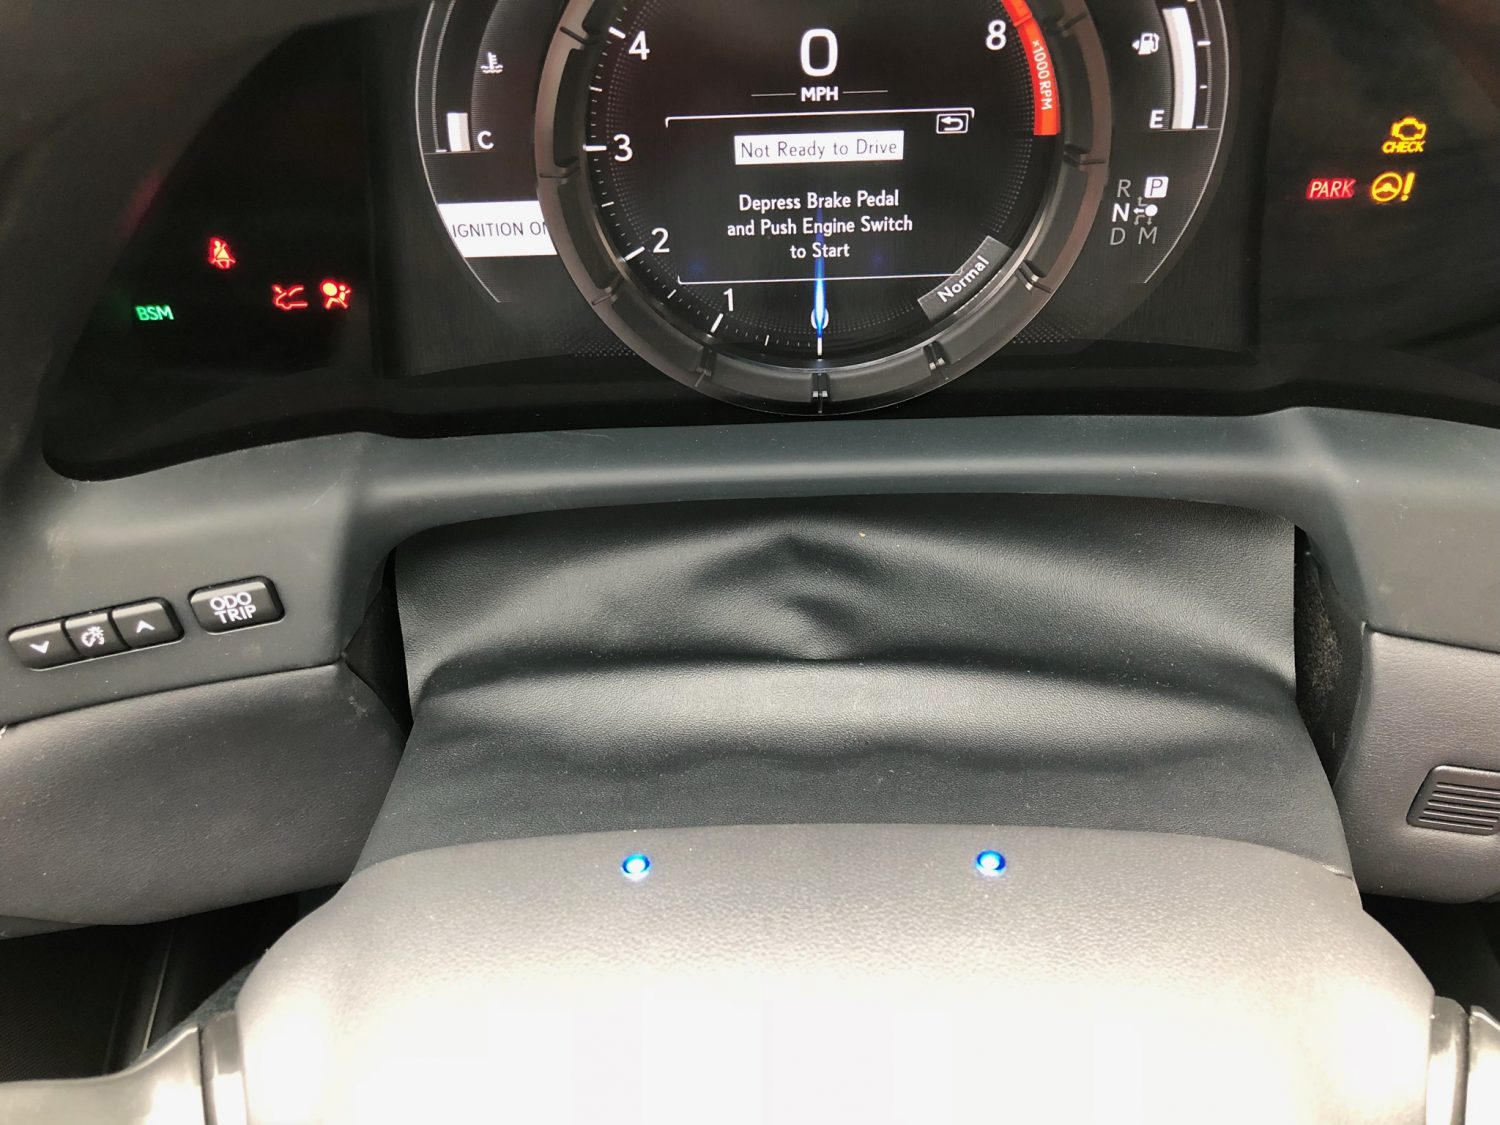 k40 radar detector alert leds on a 2018 Lexus LS500